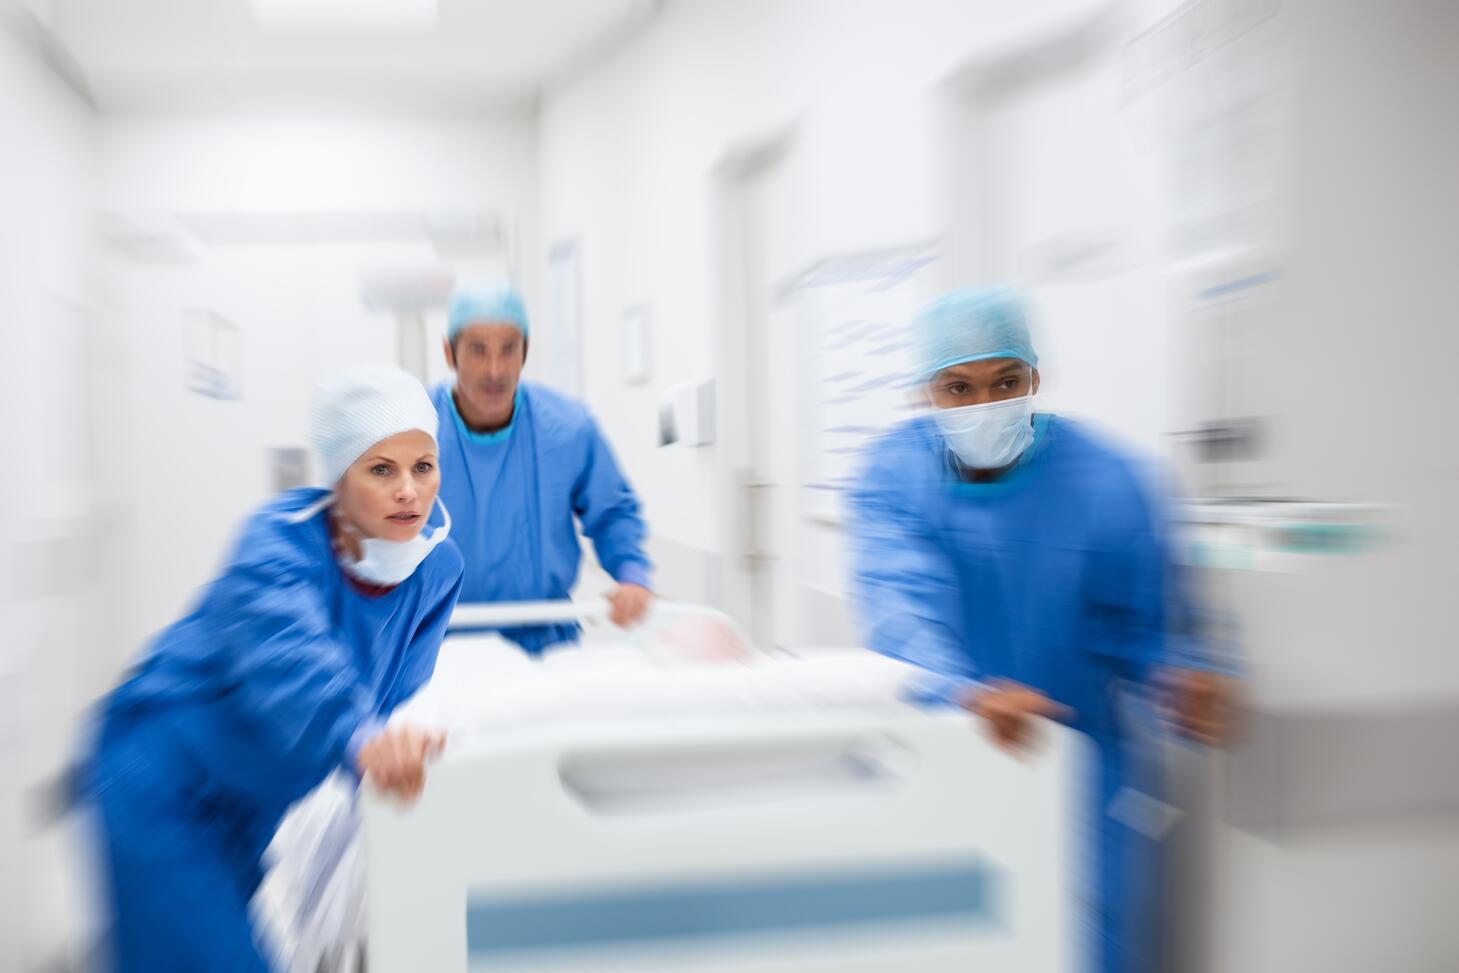 Doctors and nurses in an emergency room